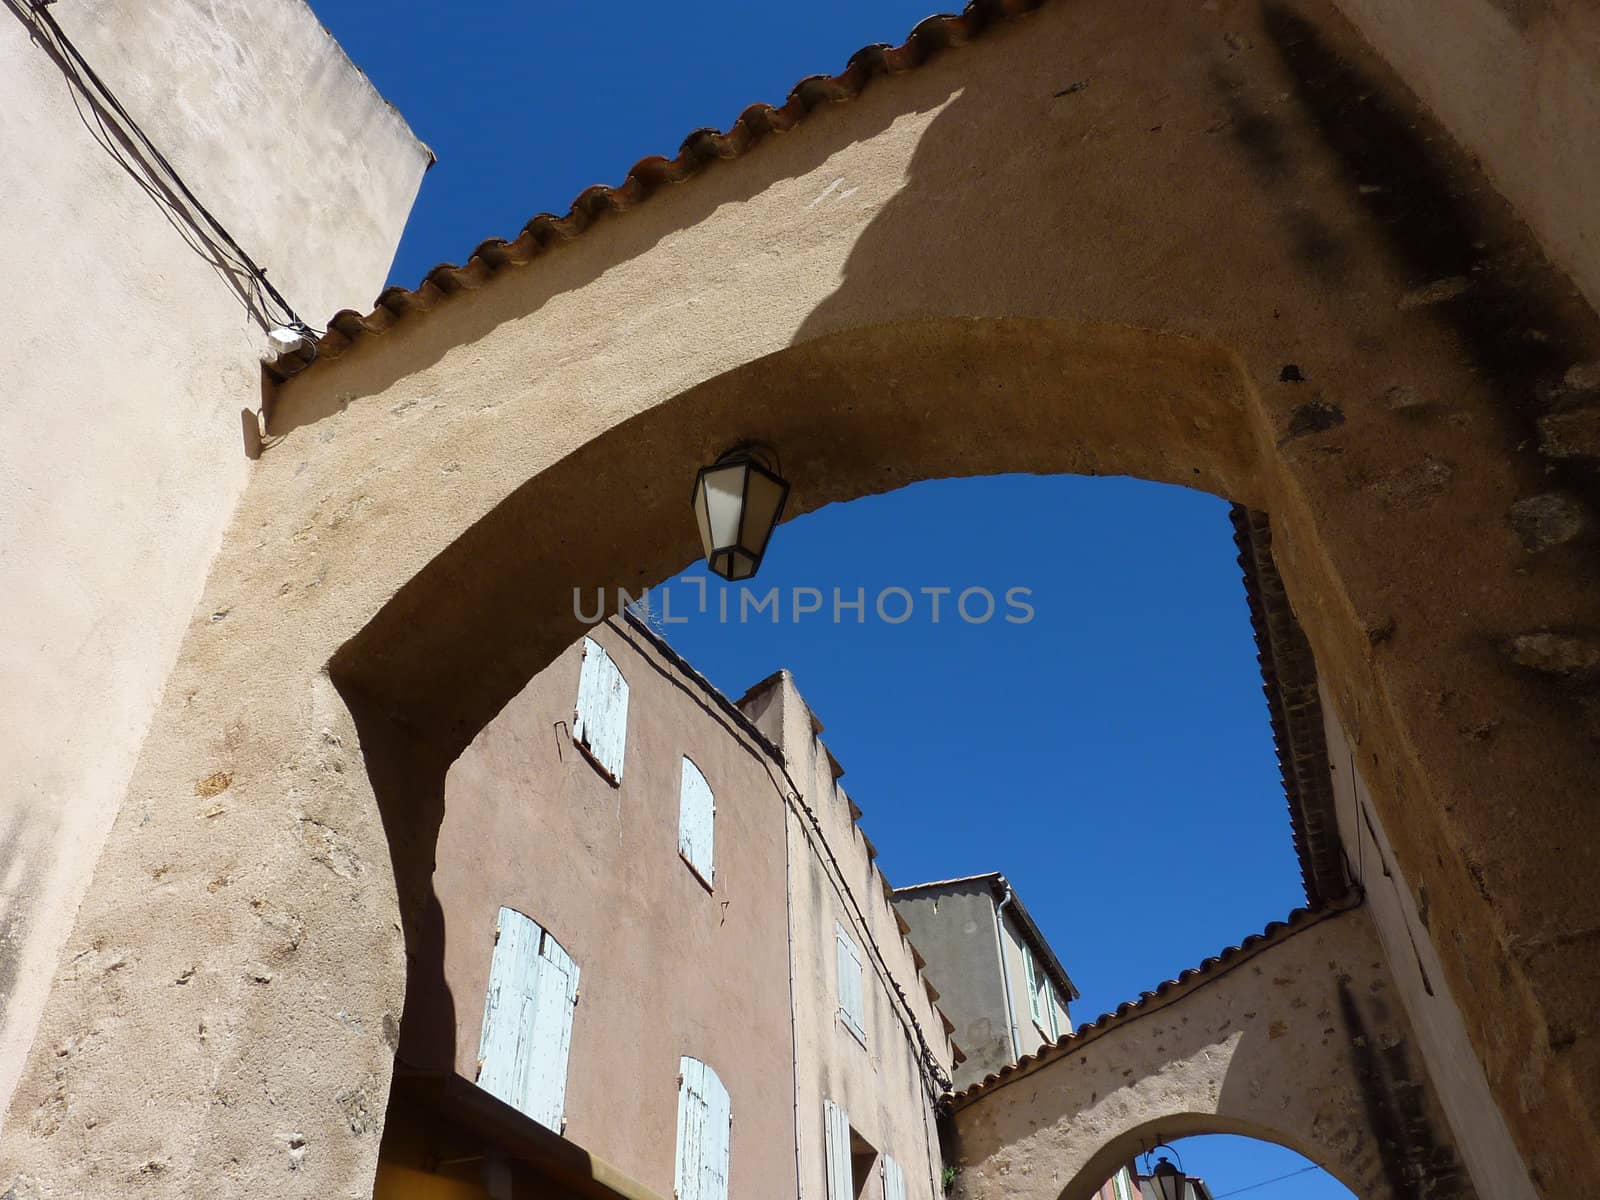 Arch in Saint-Tropez, France by Elenaphotos21